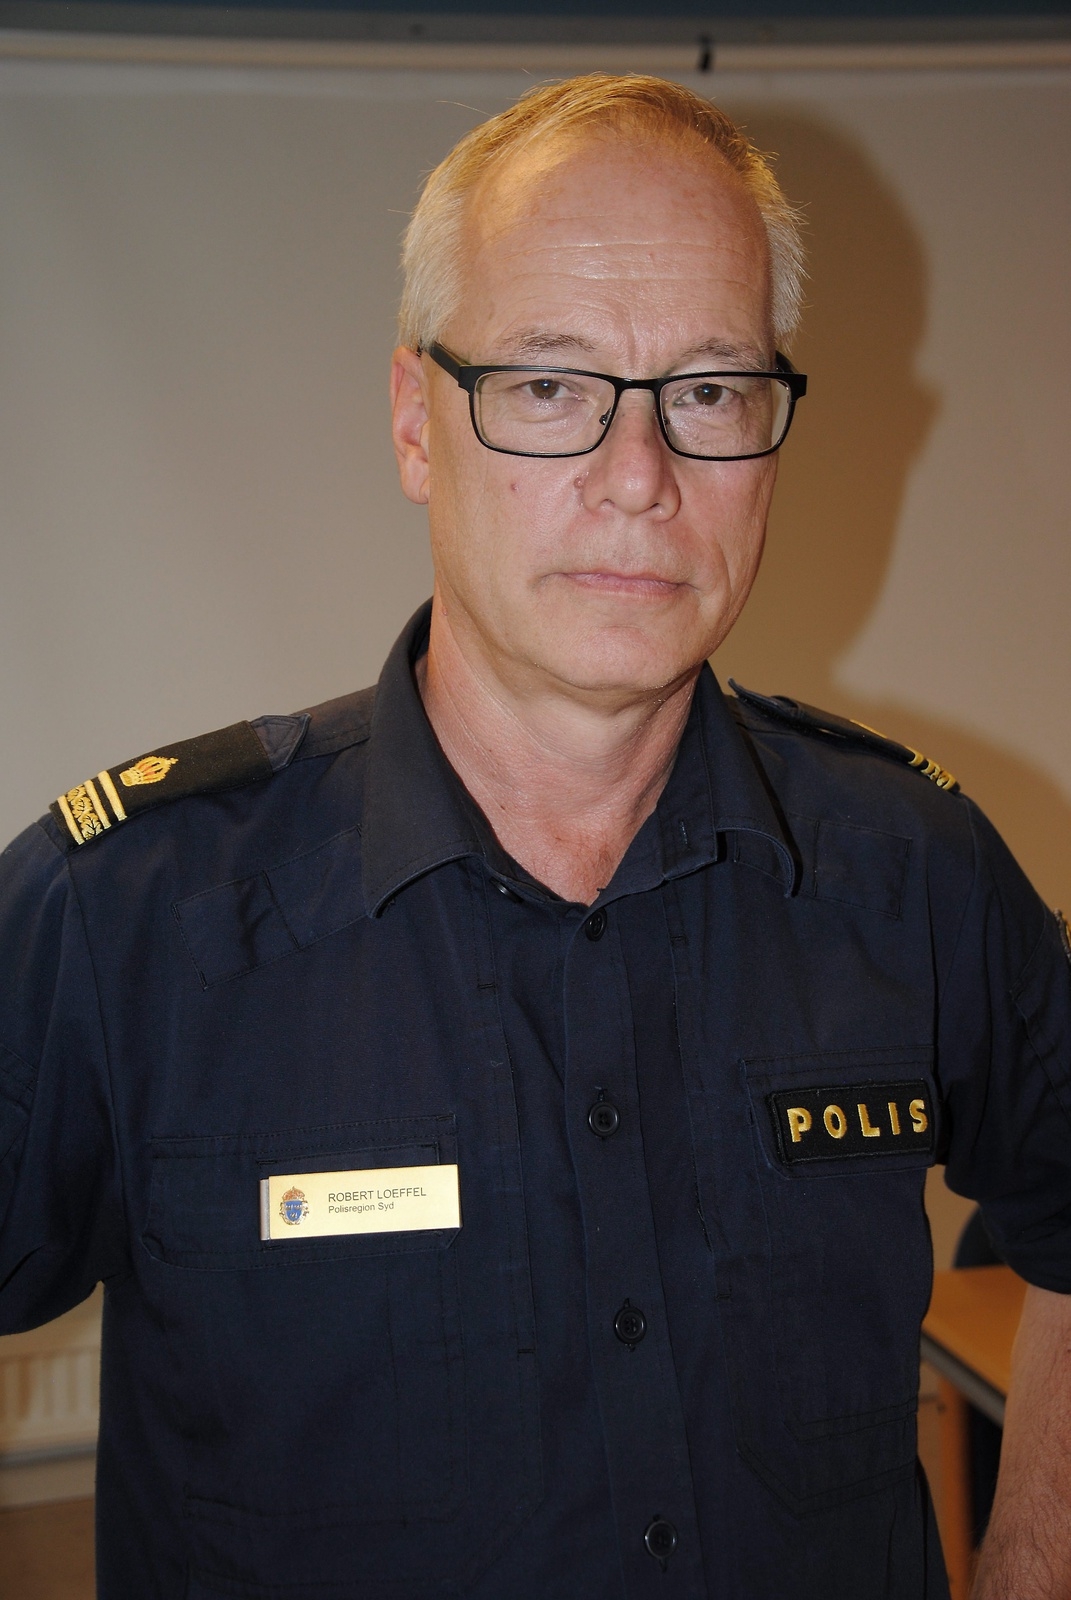 Robert Loeffel, pressekreterare polisen Syd